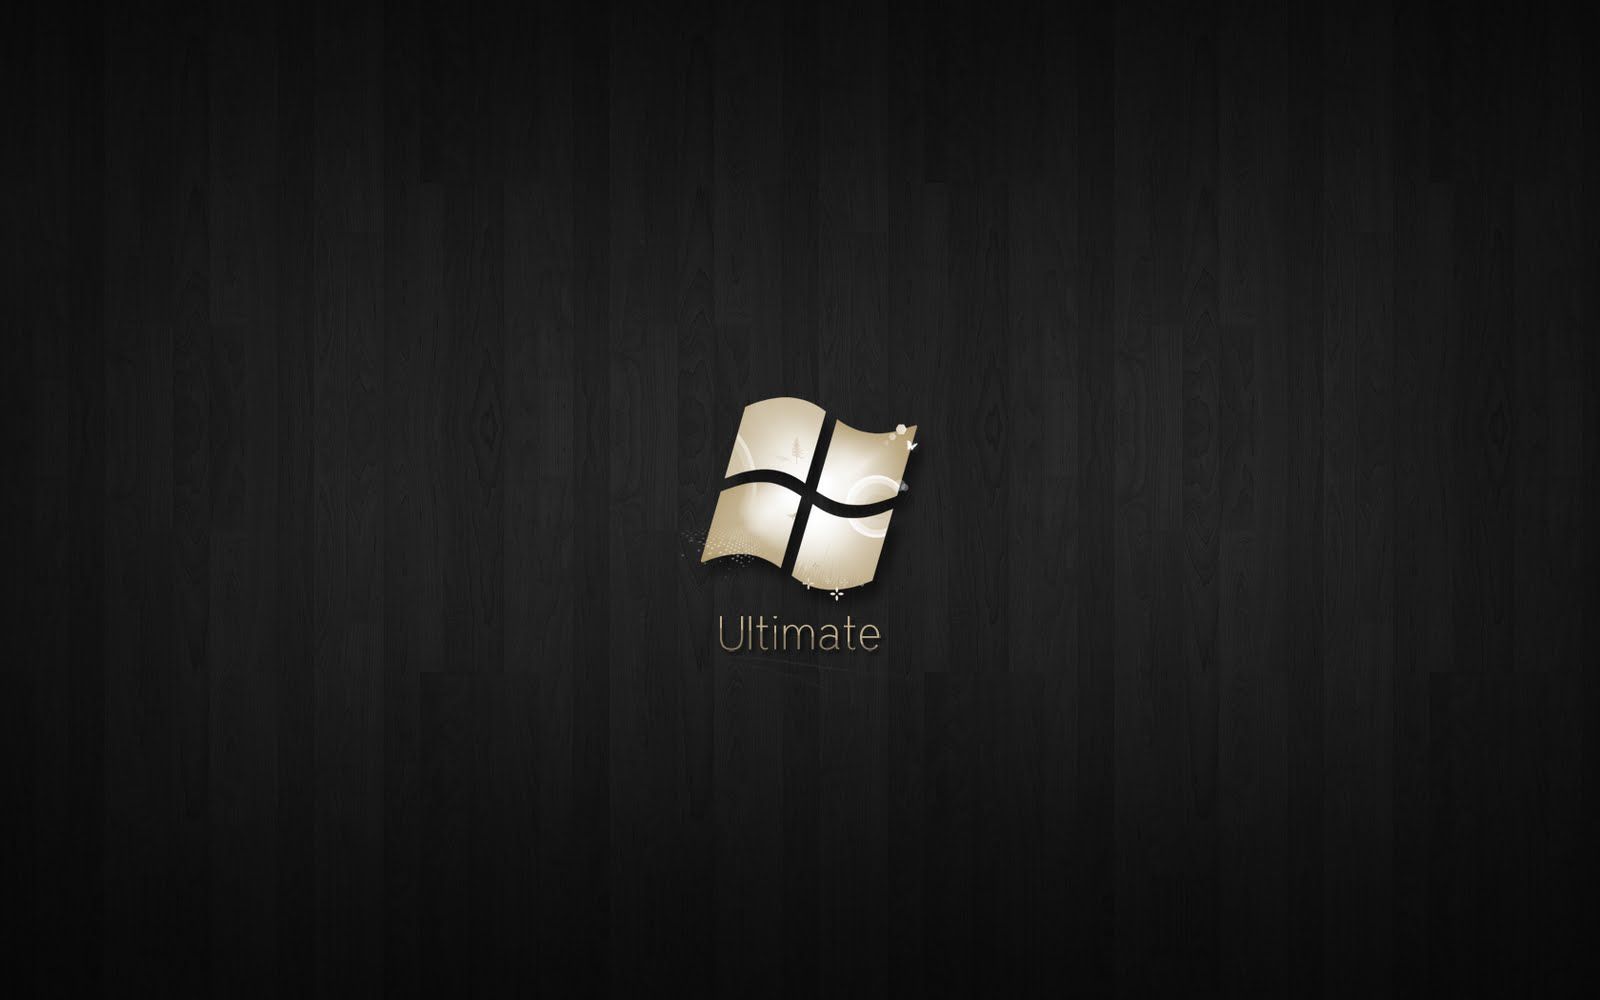 Dark HD Wallpapers for Windows 7 Ultimate